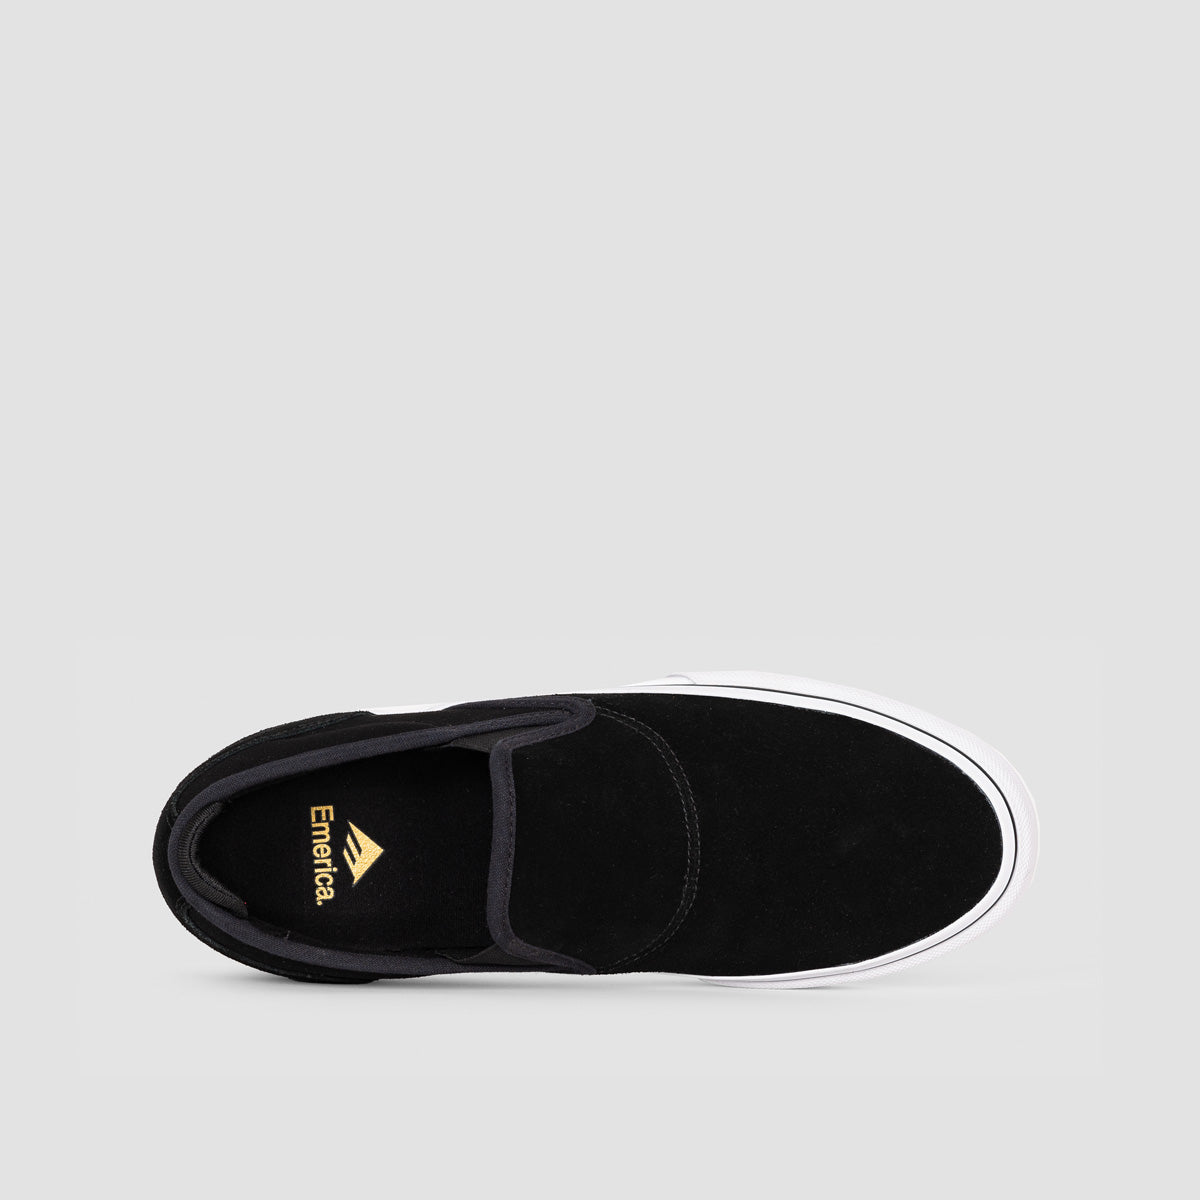 Emerica Wino G6 Slip-On Shoes - Black/White/Gold